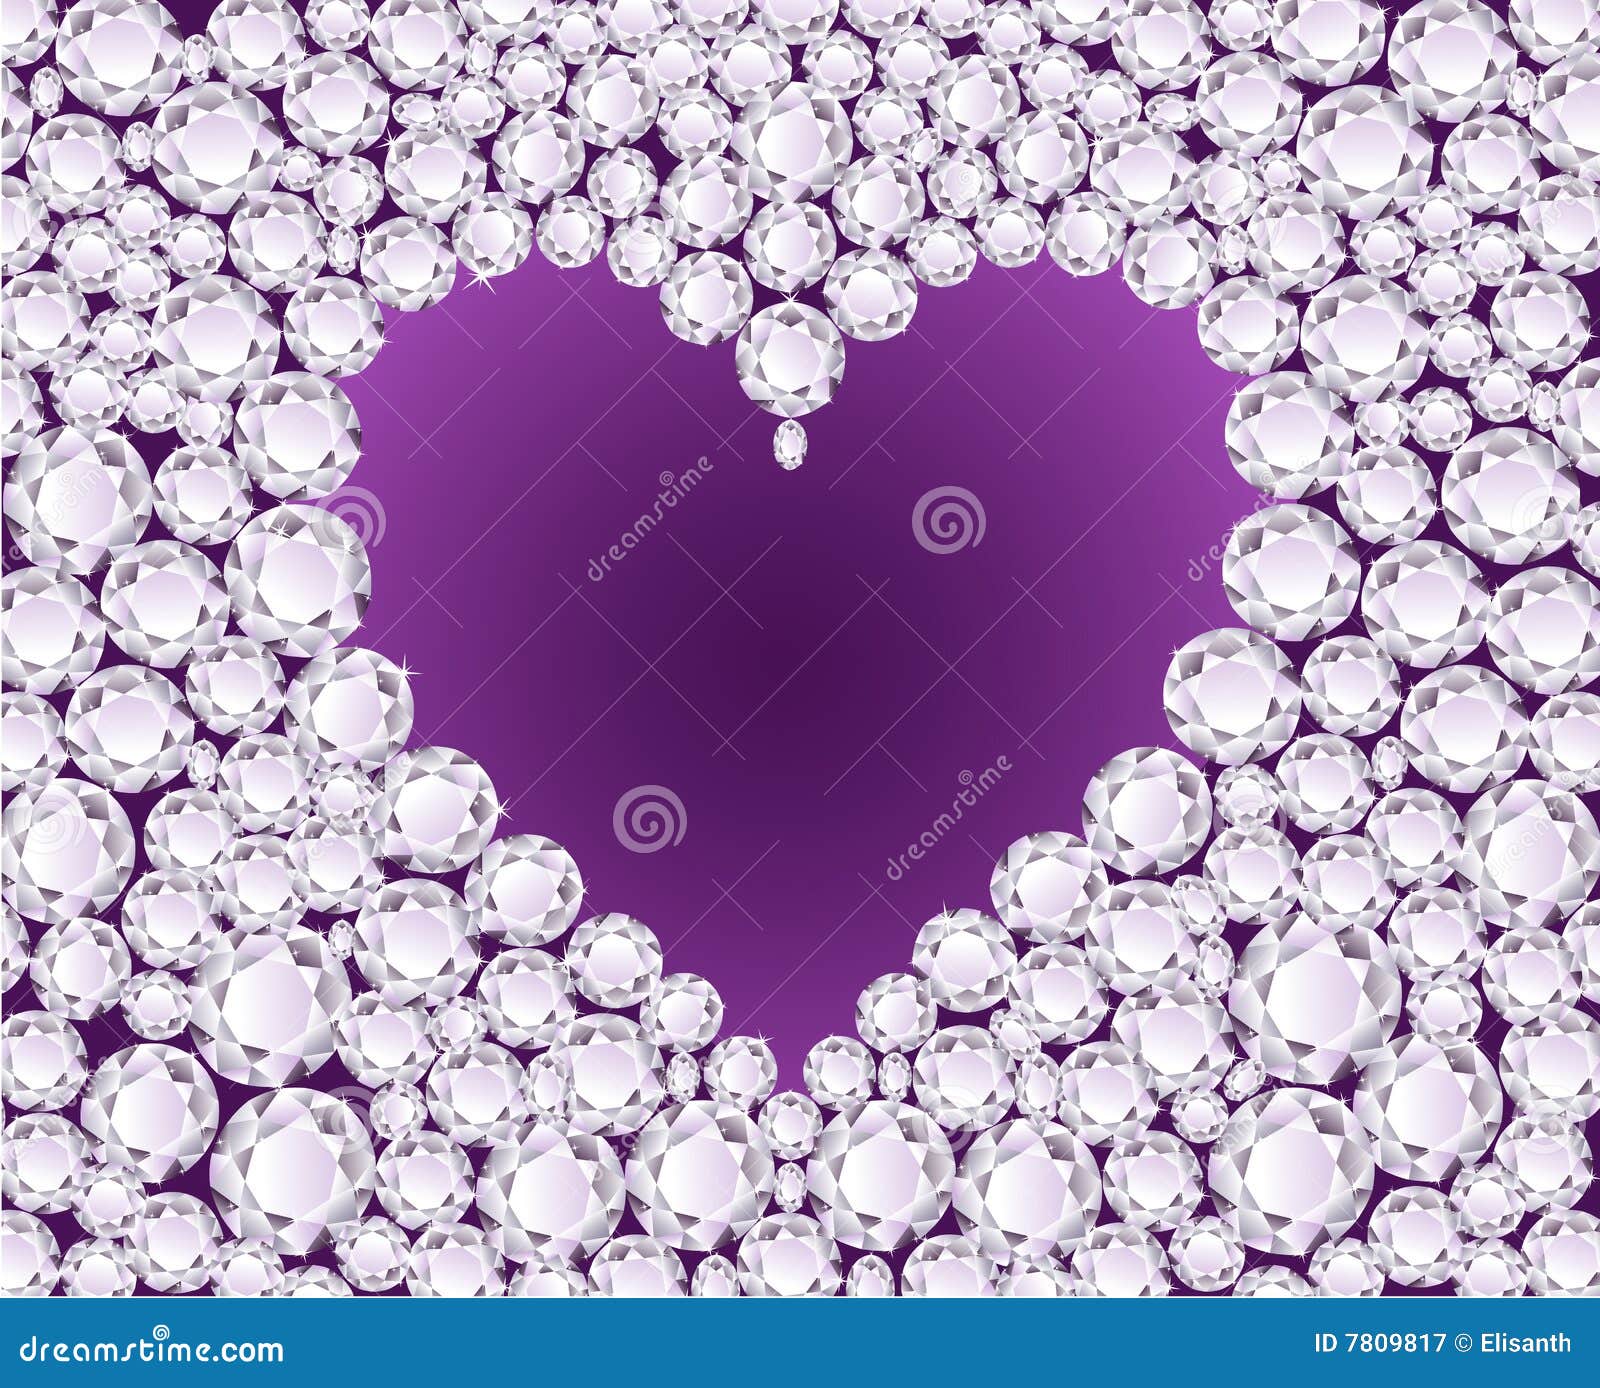 Vector Purple Heart On Diamond Background Royalty Free Stock